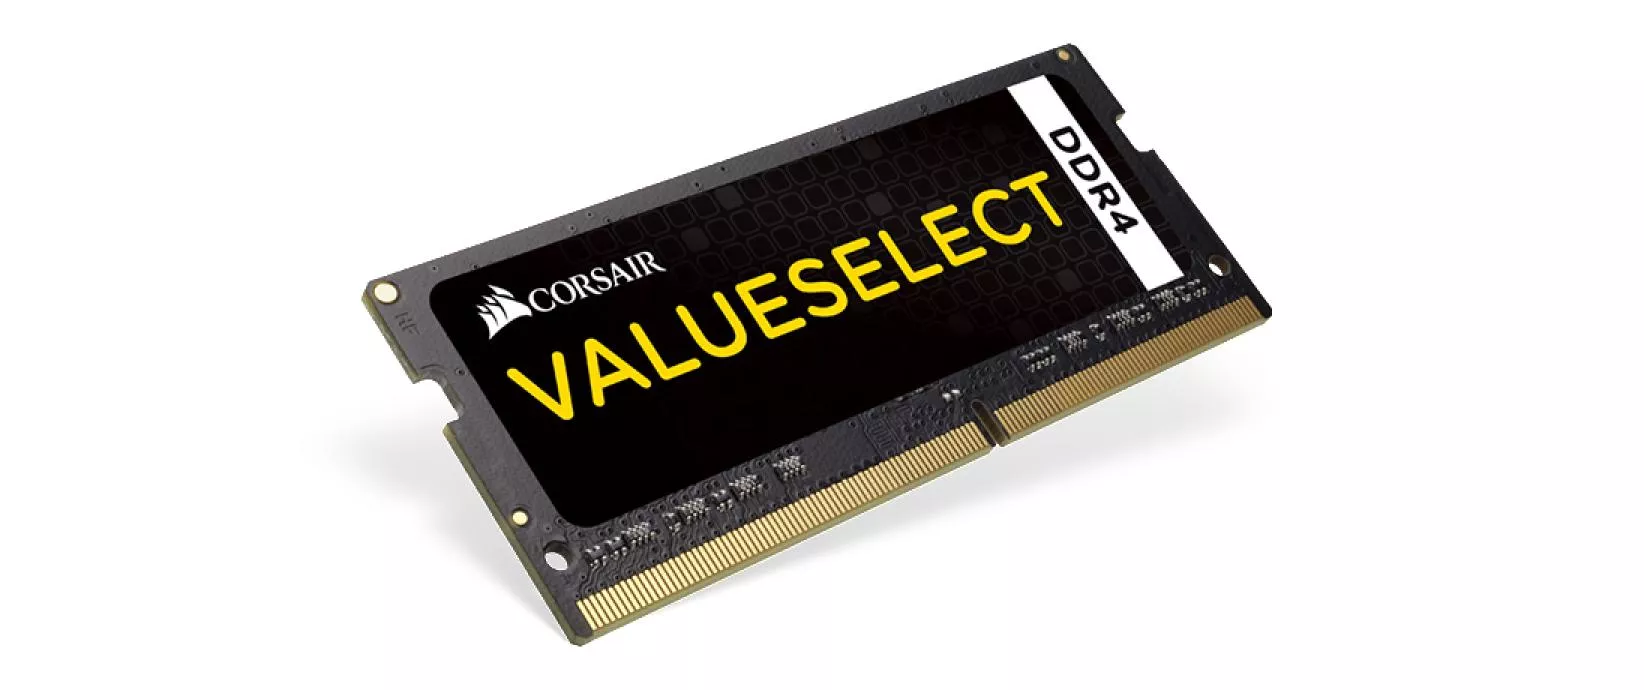 SO-DDR4 RAM ValueSelect 2133 MHz 1x 16 GB